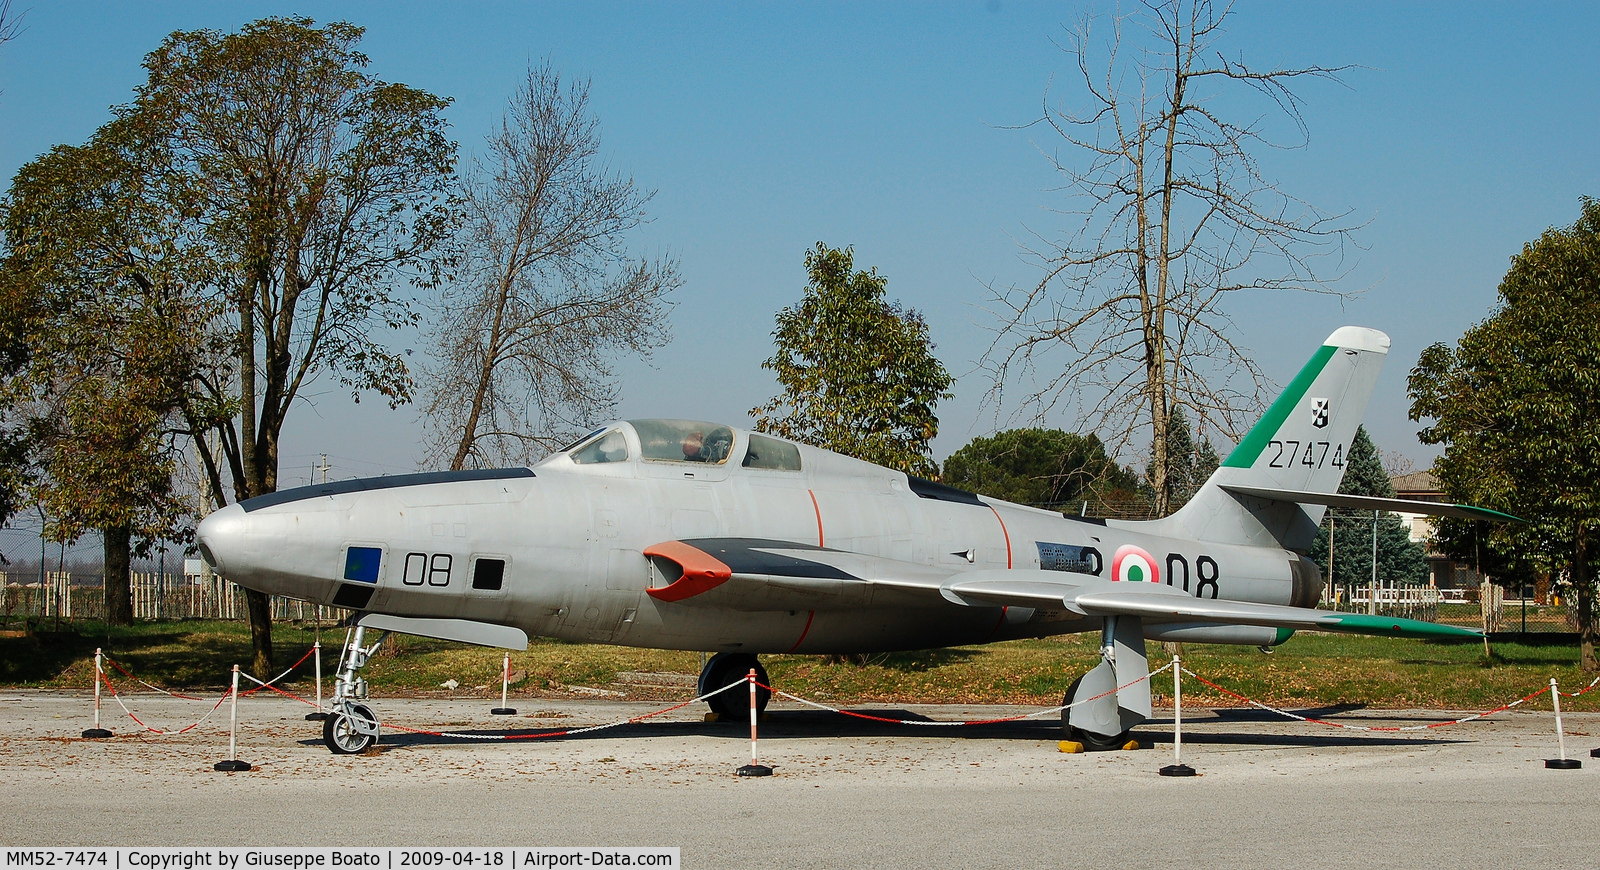 MM52-7474, 1952 Republic RF-84F Thunderflash C/N Not found (52-7474), Republic RF 84 F Thunderflash 3^ Aerobrigata 18° Gruppo Verona Villafranca
now at Rivolto, Frecce Tricolori Airbase